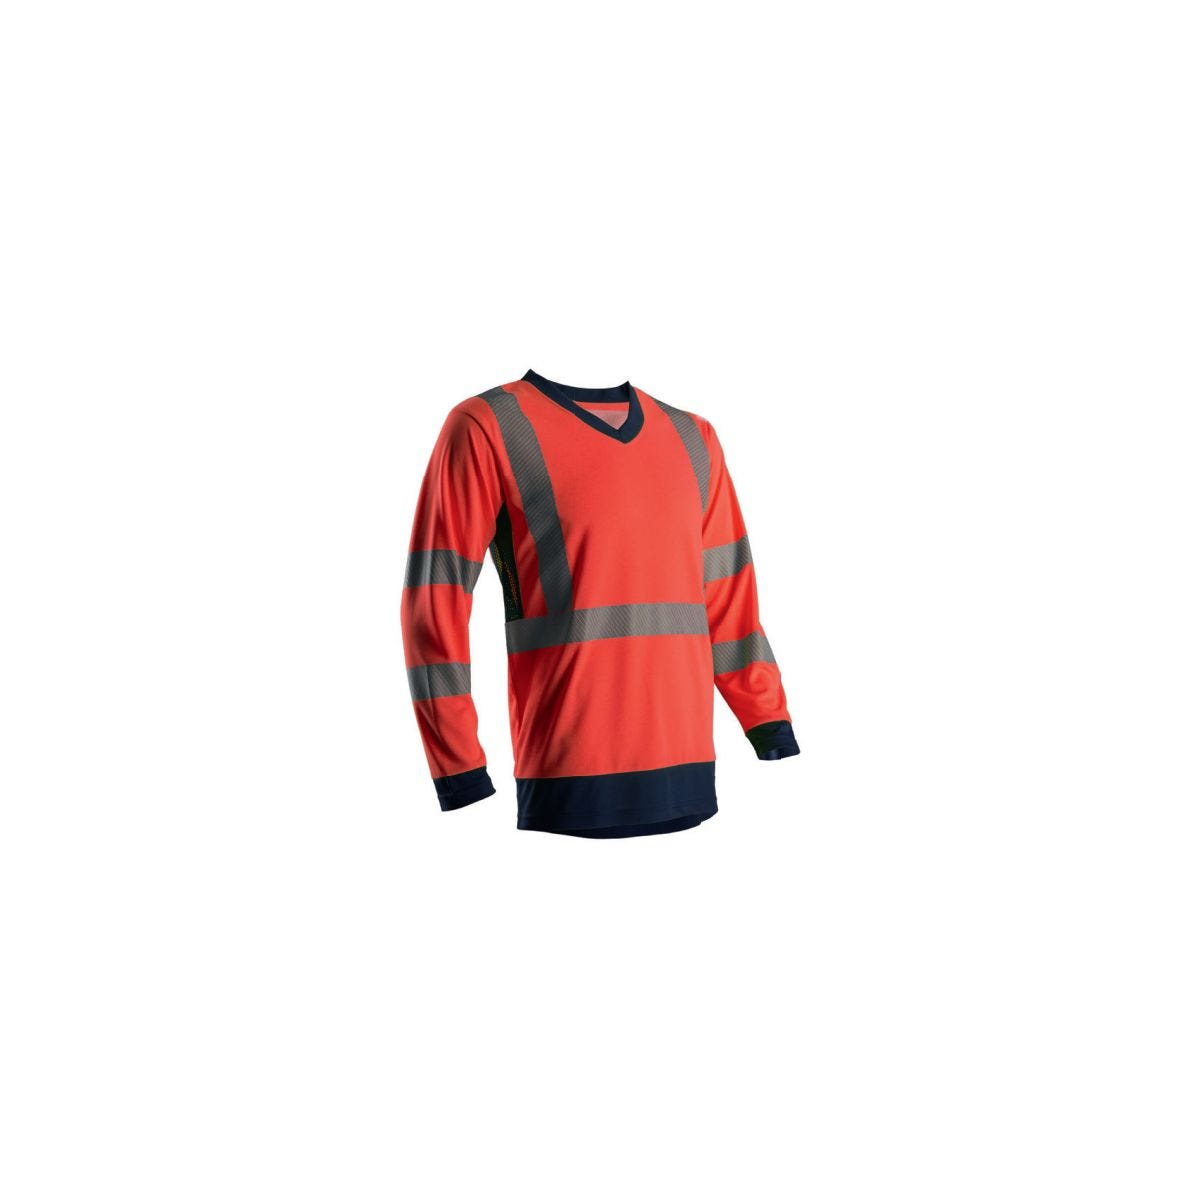 T-shirt HV manches longues Suno rouge et marine - Coverguard - Taille 3XL 0